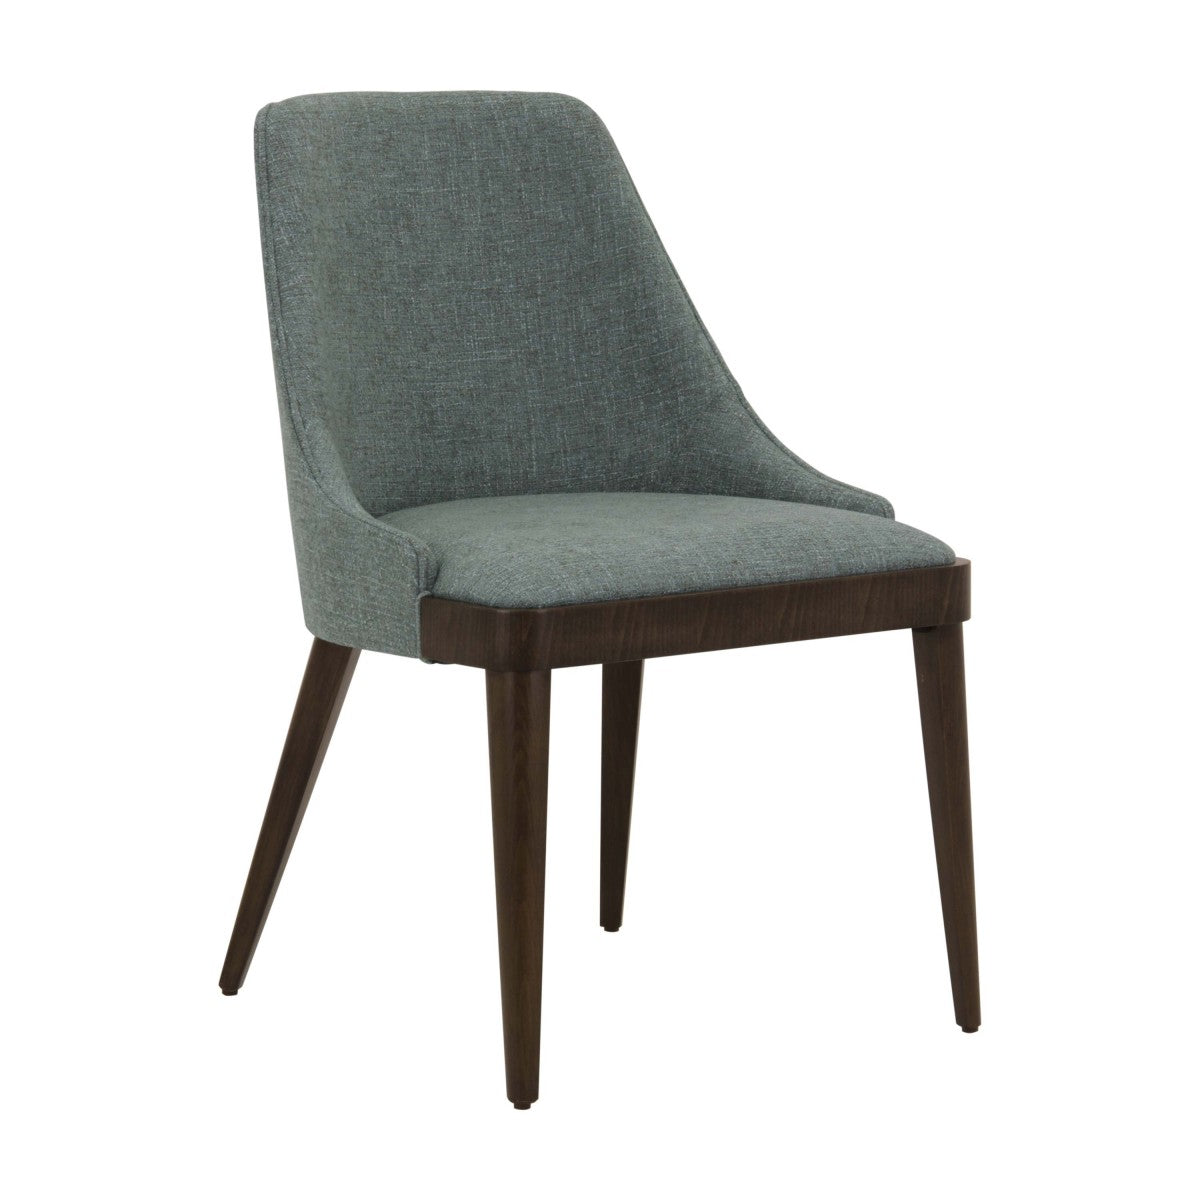 Danimarka Bespoke Upholstered Modern Contemporary Dining Chair MS228S Custom Made To Order